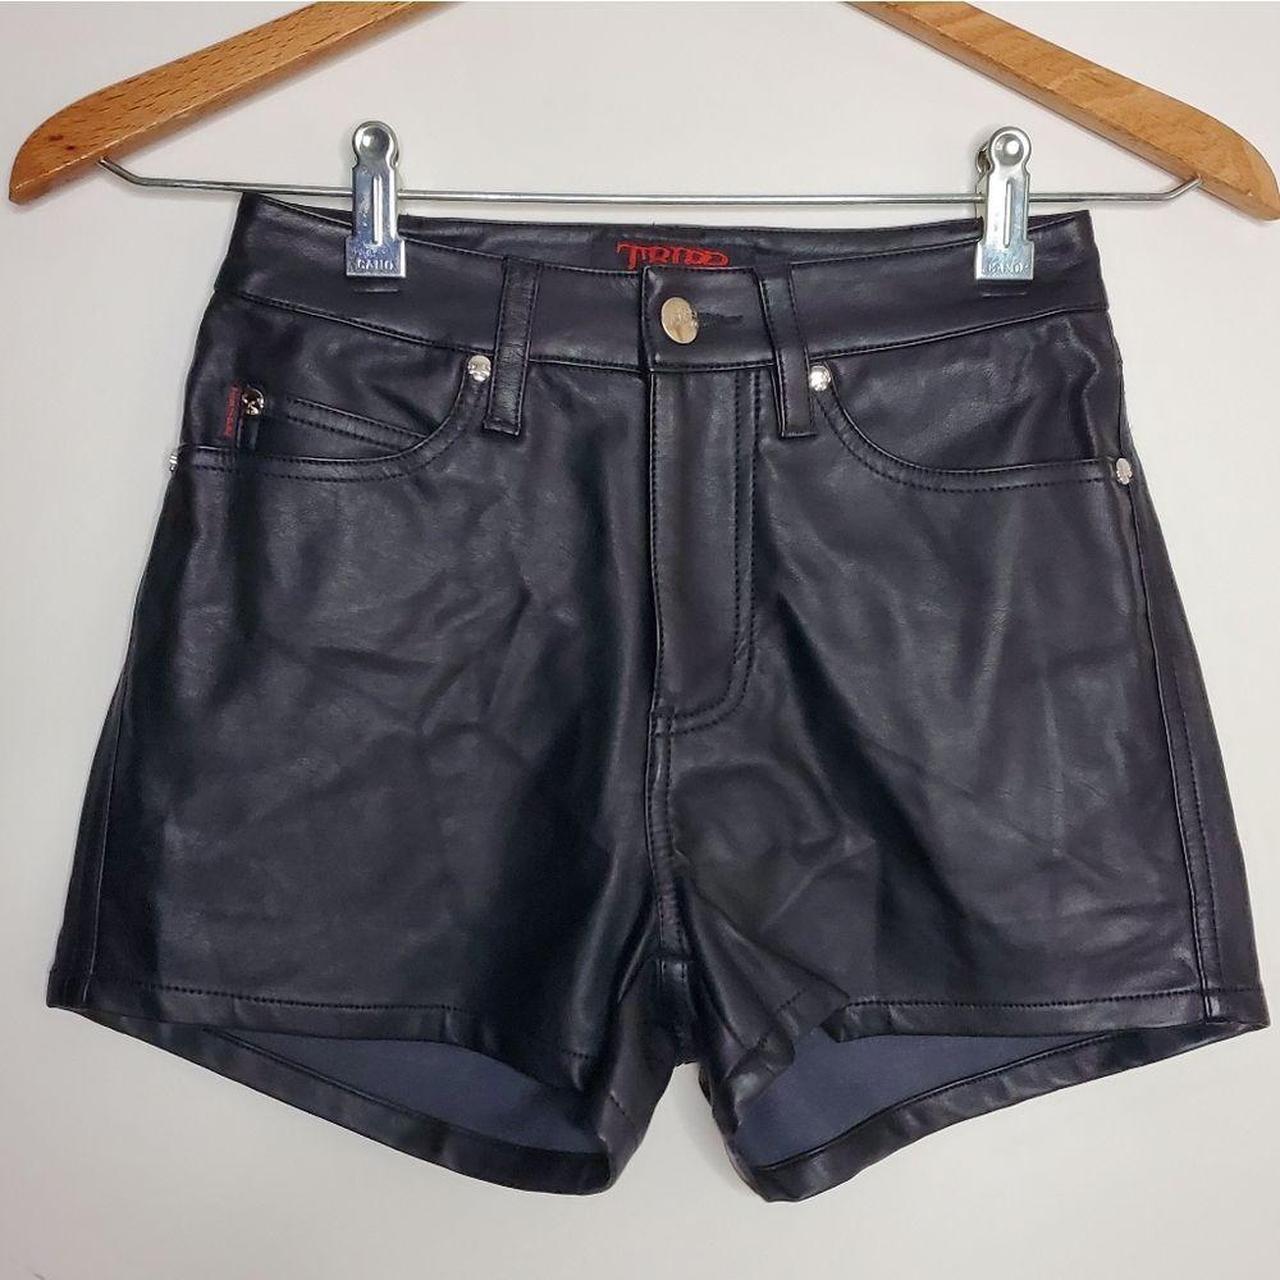 Manhattan Leather Short - Black - Shorts - Short - Women's